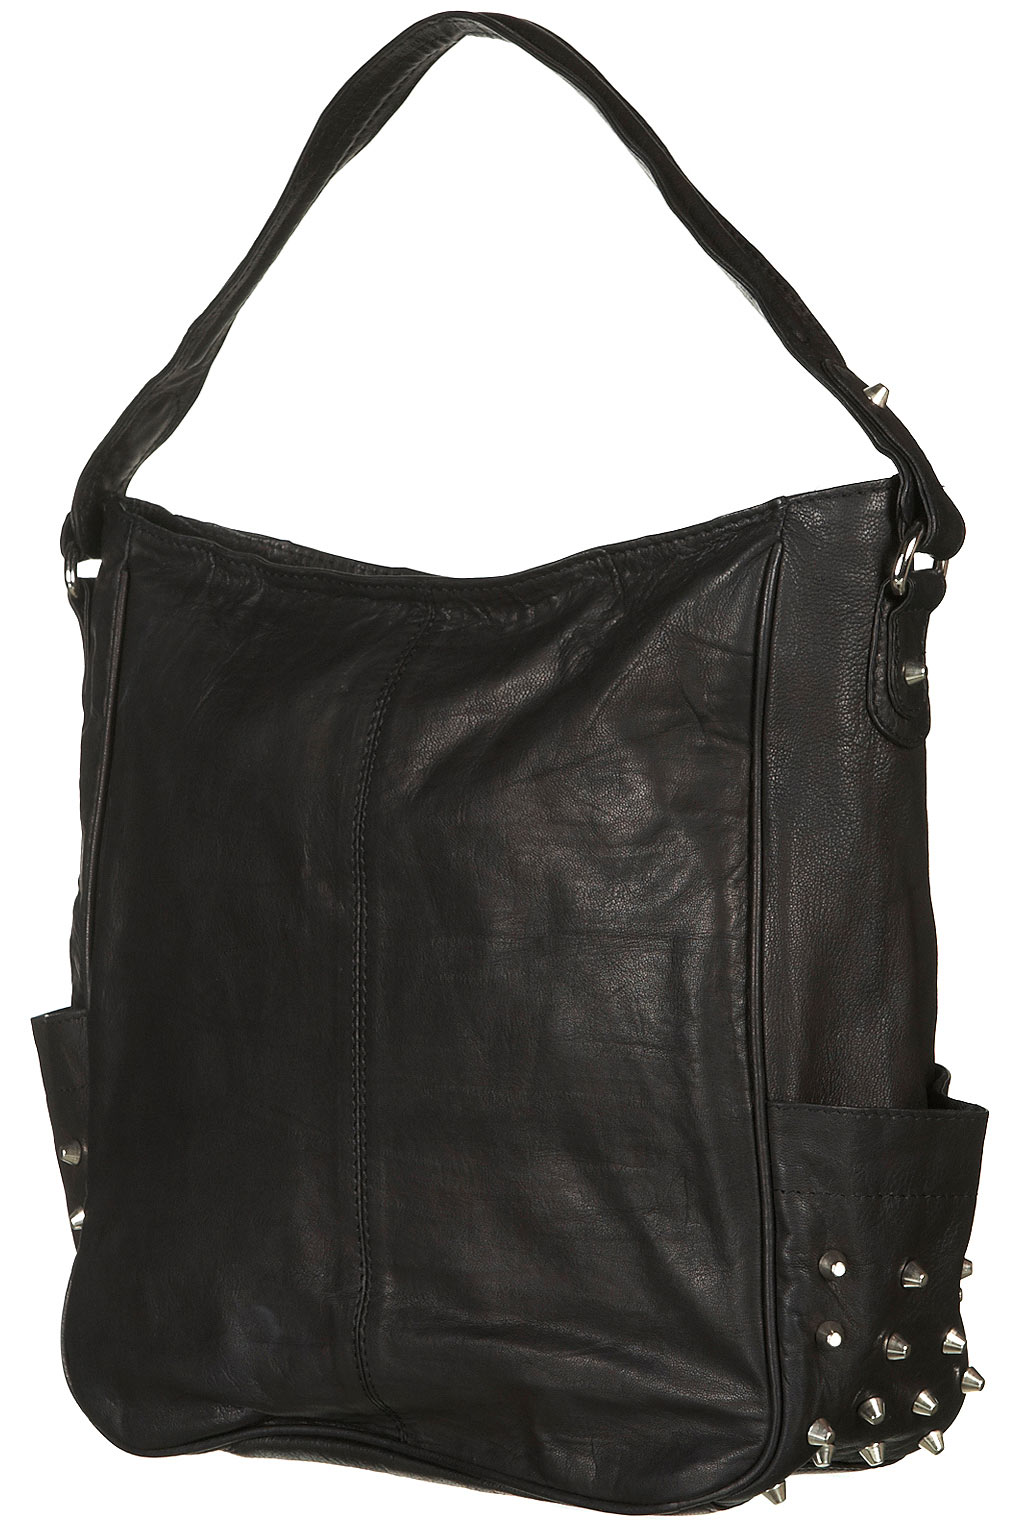 Lyst - Topshop Studded Leather Hobo Bag in Black